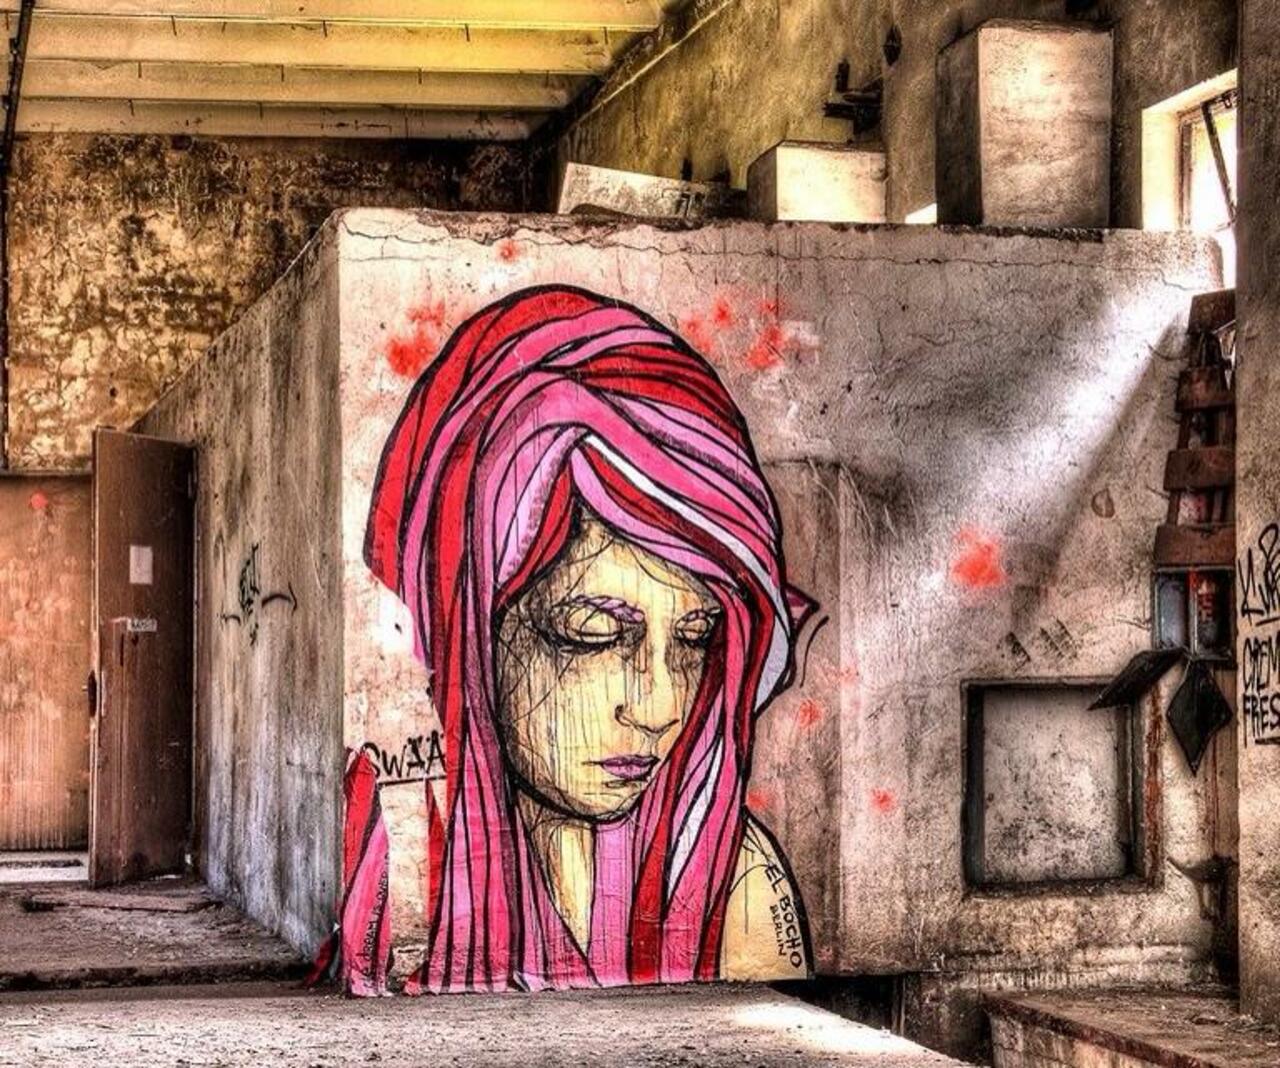 RT @GoogleStreetArt: Street Art by El Bocho 

#art #arte #graffiti  #streetart http://t.co/ef8PuBkmQP